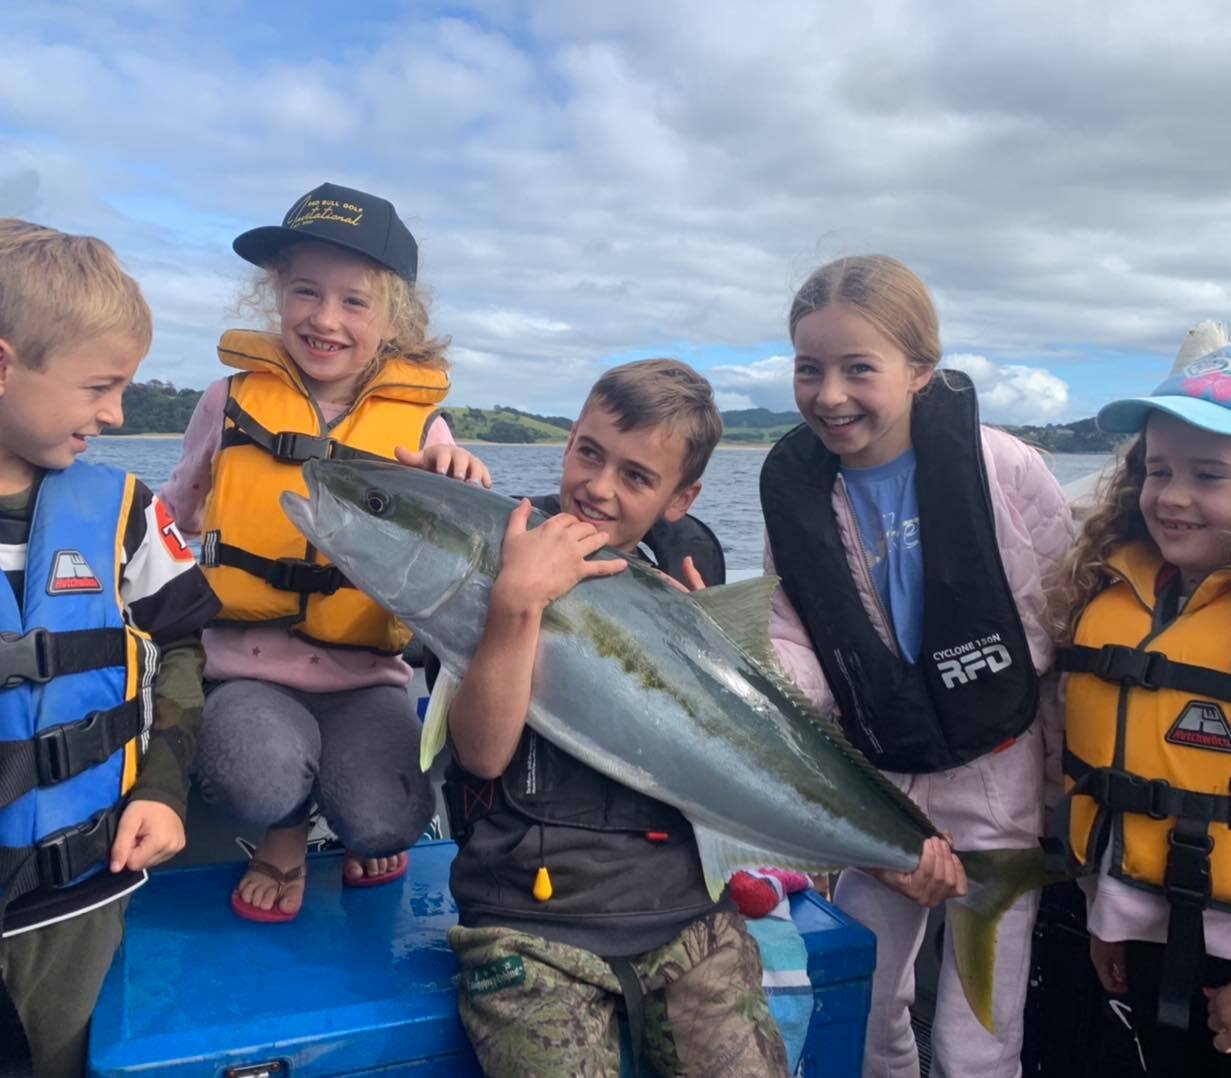 Fun Family Fishing Charter - School Holiday Fishing Fun! — Provider  Retreats & Adventures